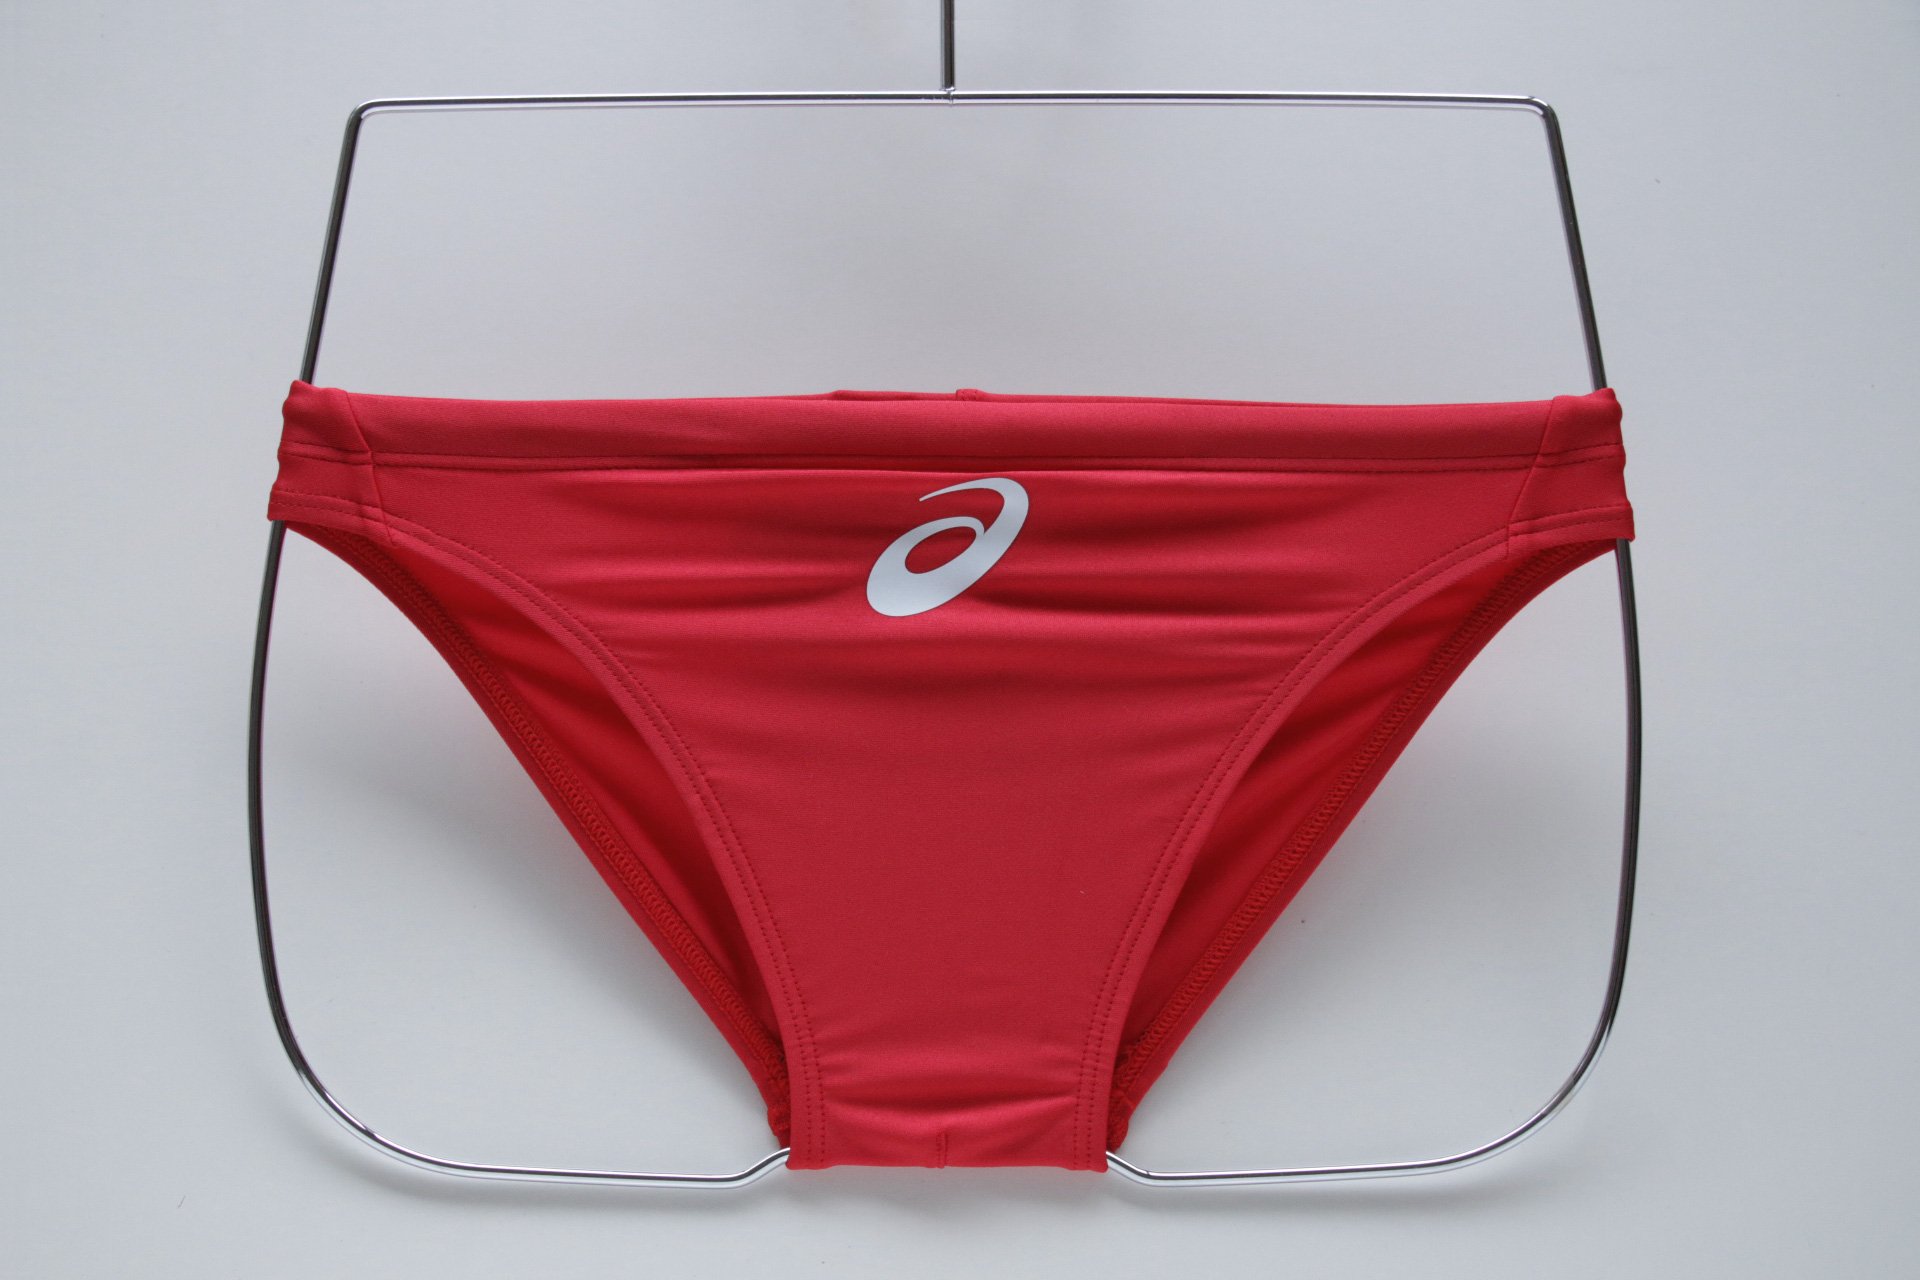 Bespoke asics Men's Competition Swimwear Successor to HYDRO-CD Brief Red